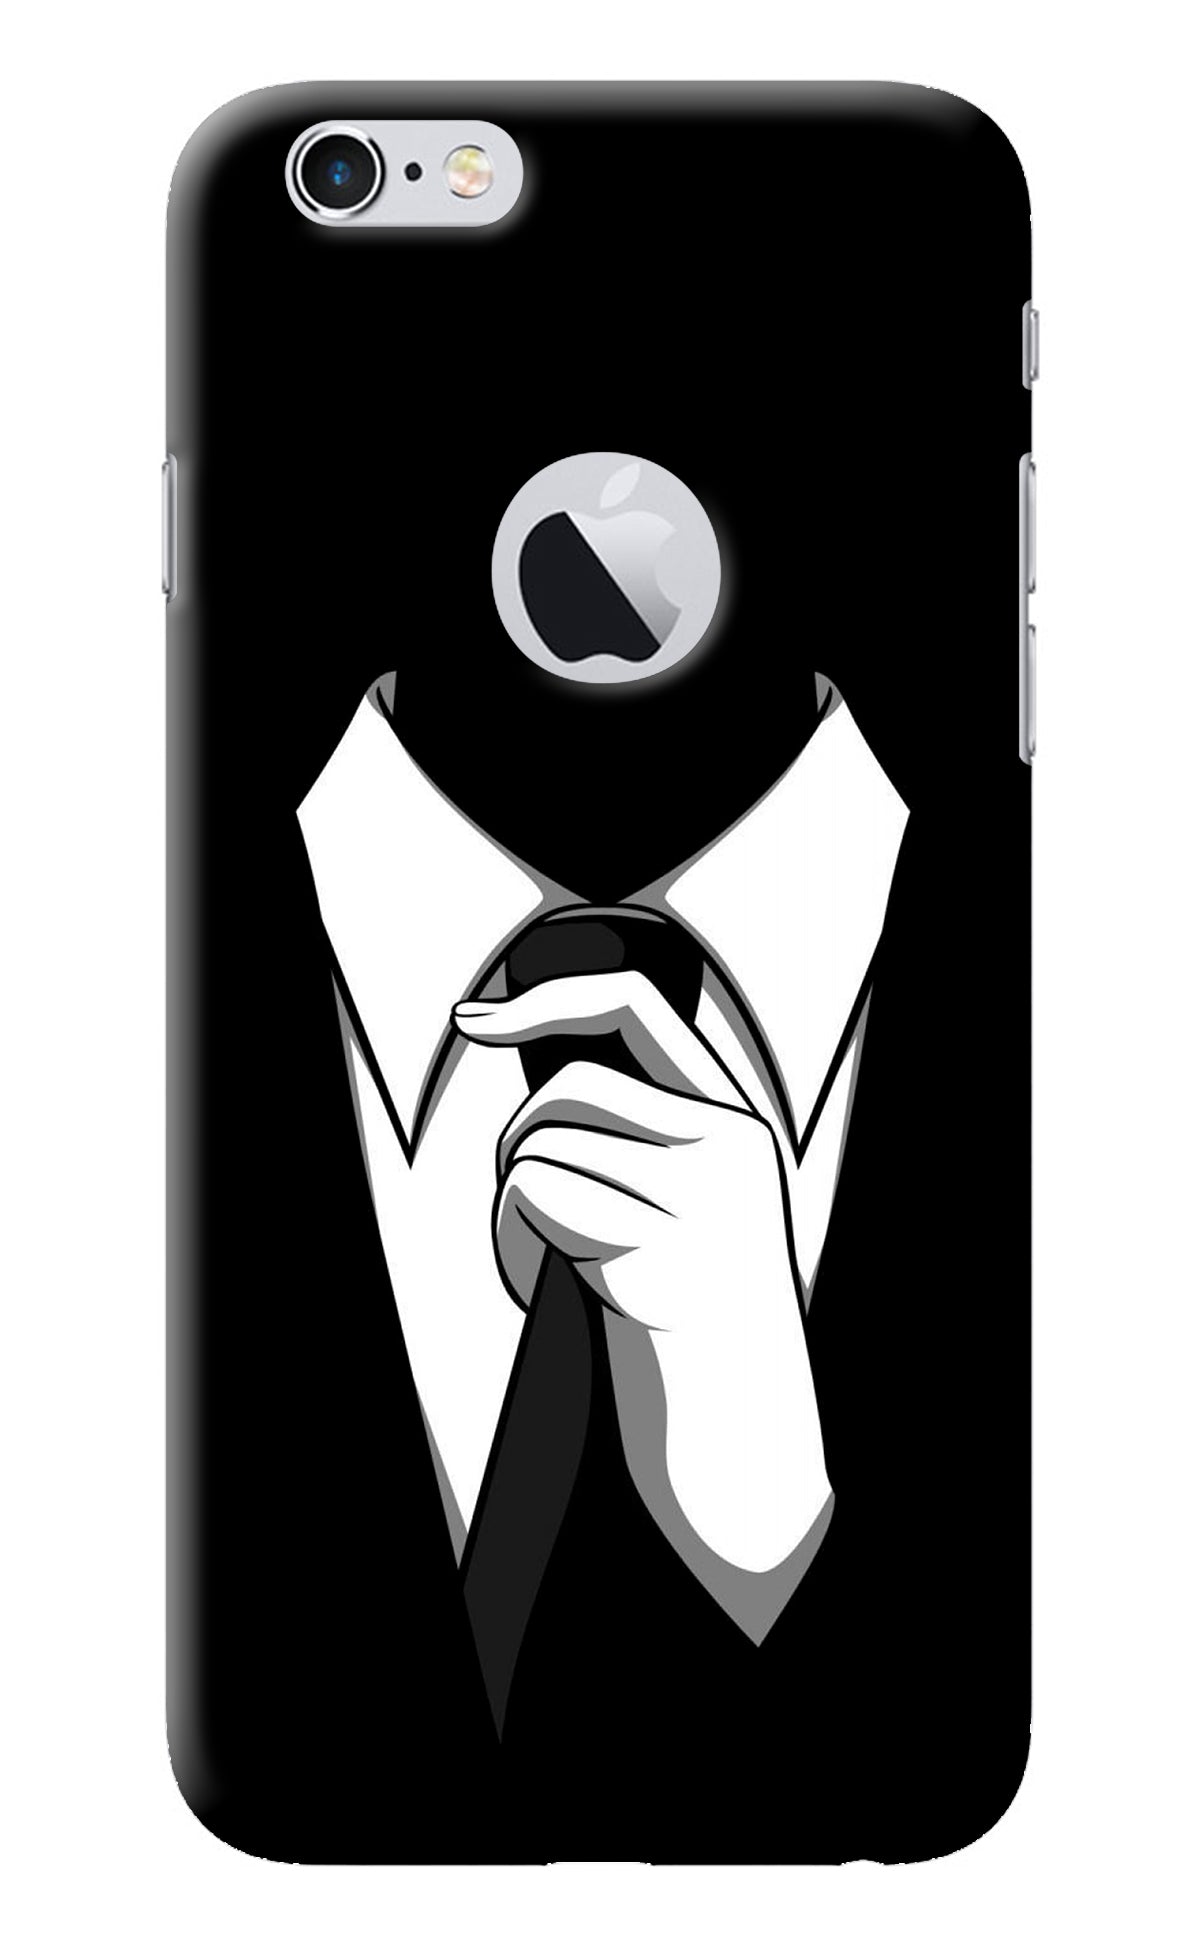 Black Tie iPhone 6 Logocut Back Cover